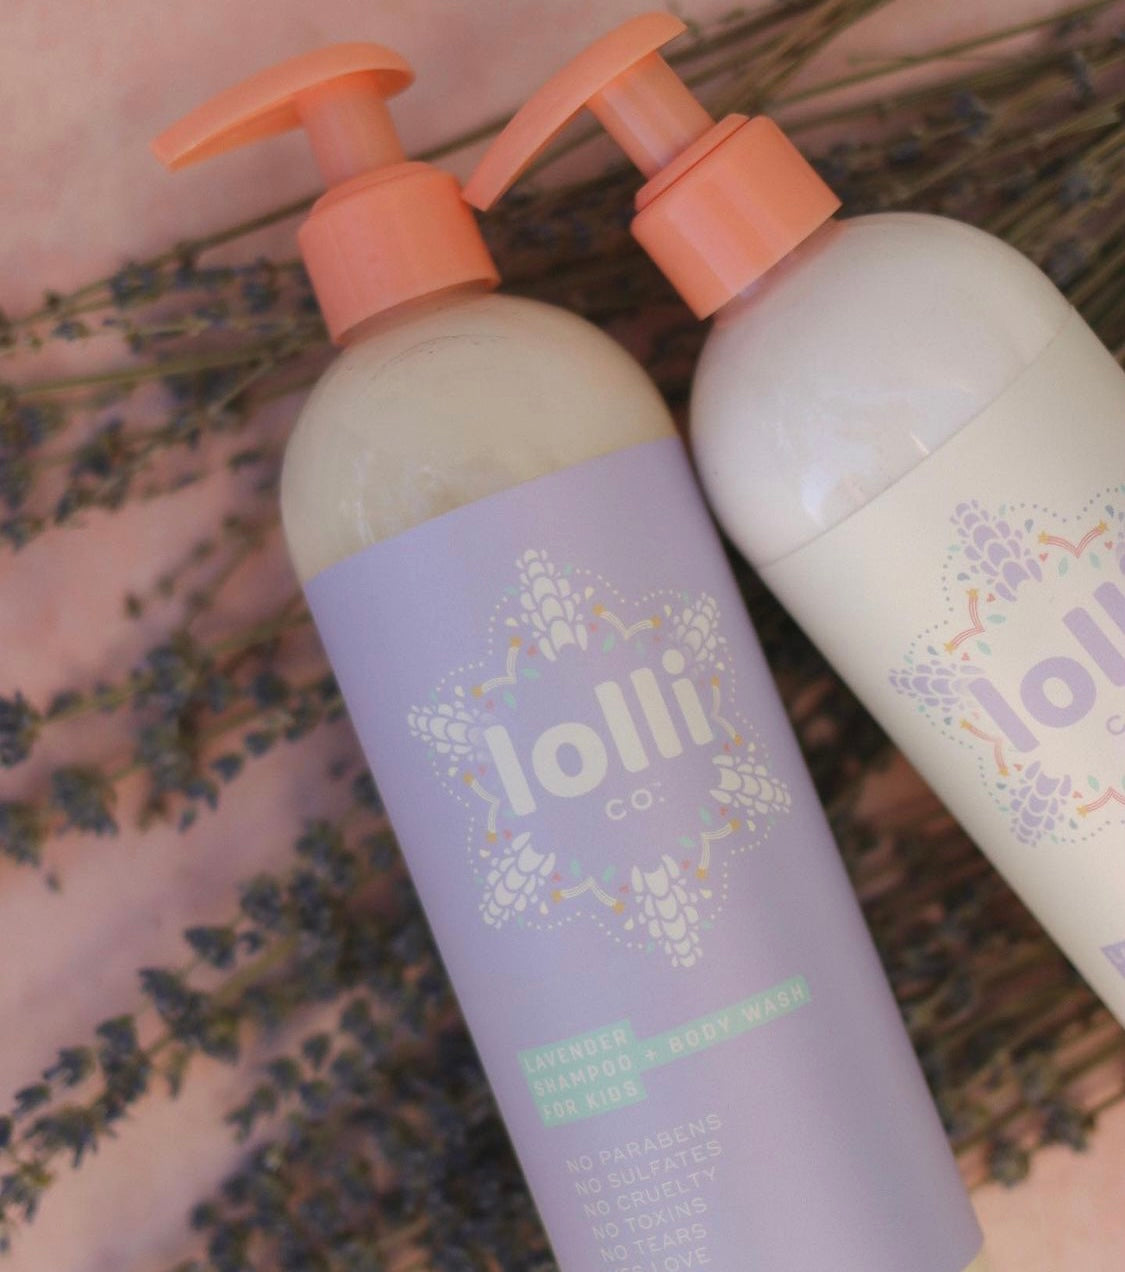 Lolli Co Lavender Shampoo + Body Wash for Kids